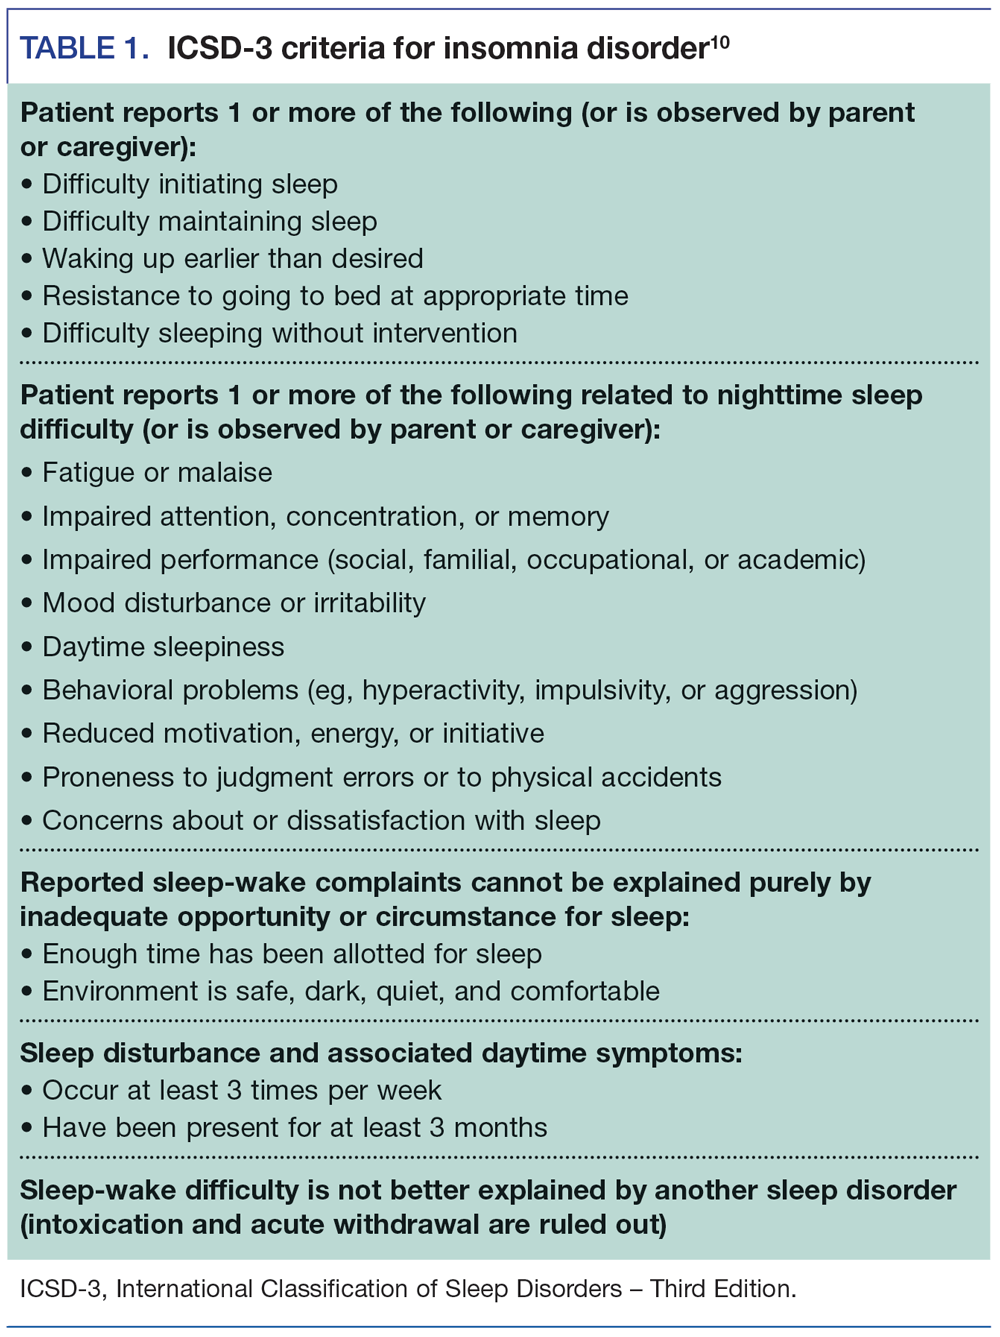 ICSD-3 criteria for insomnia disorder